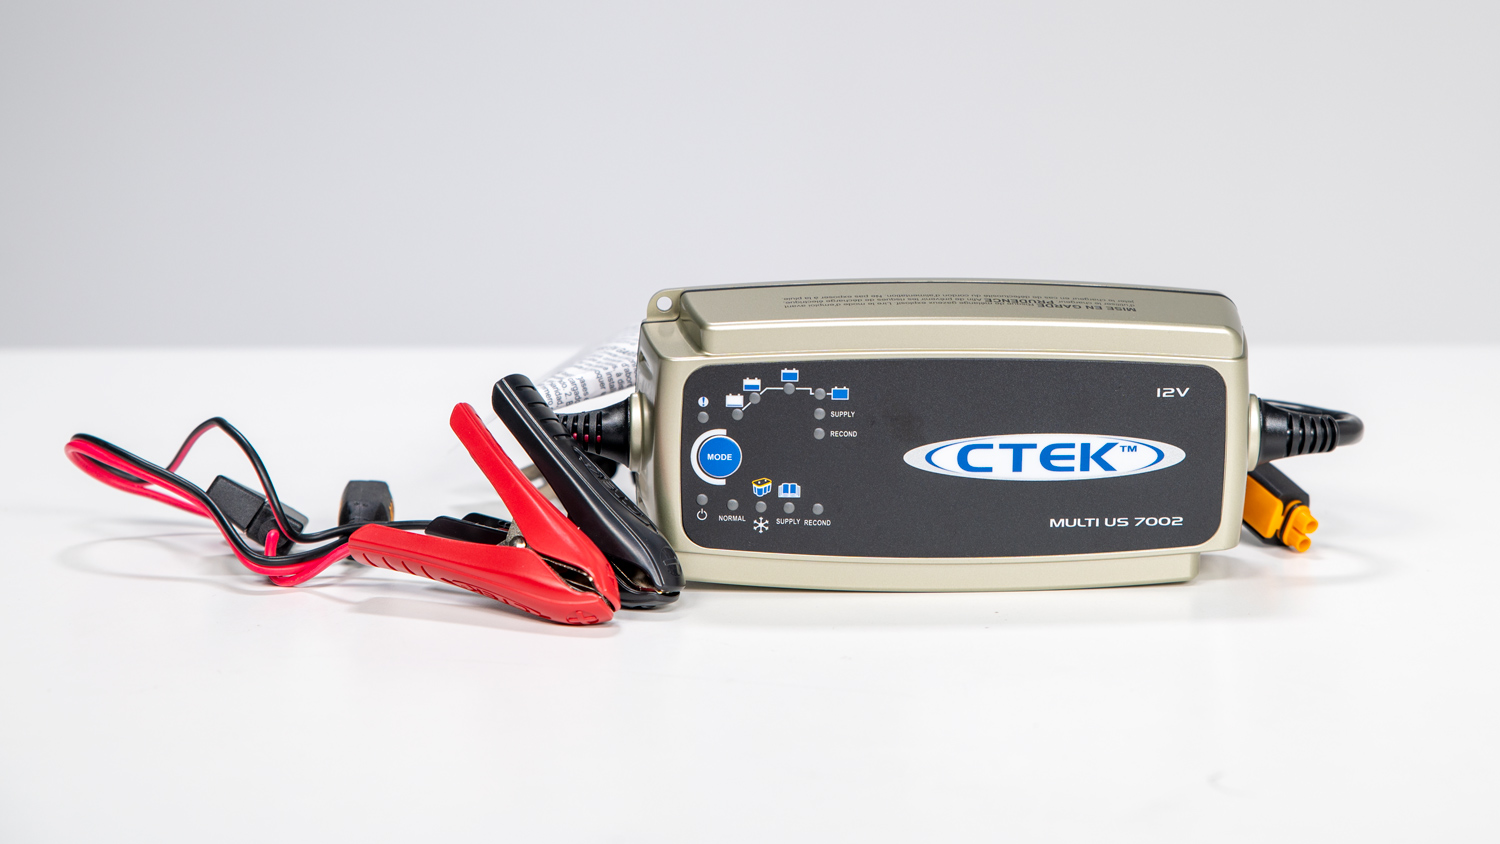 The CTEK car battery charger.